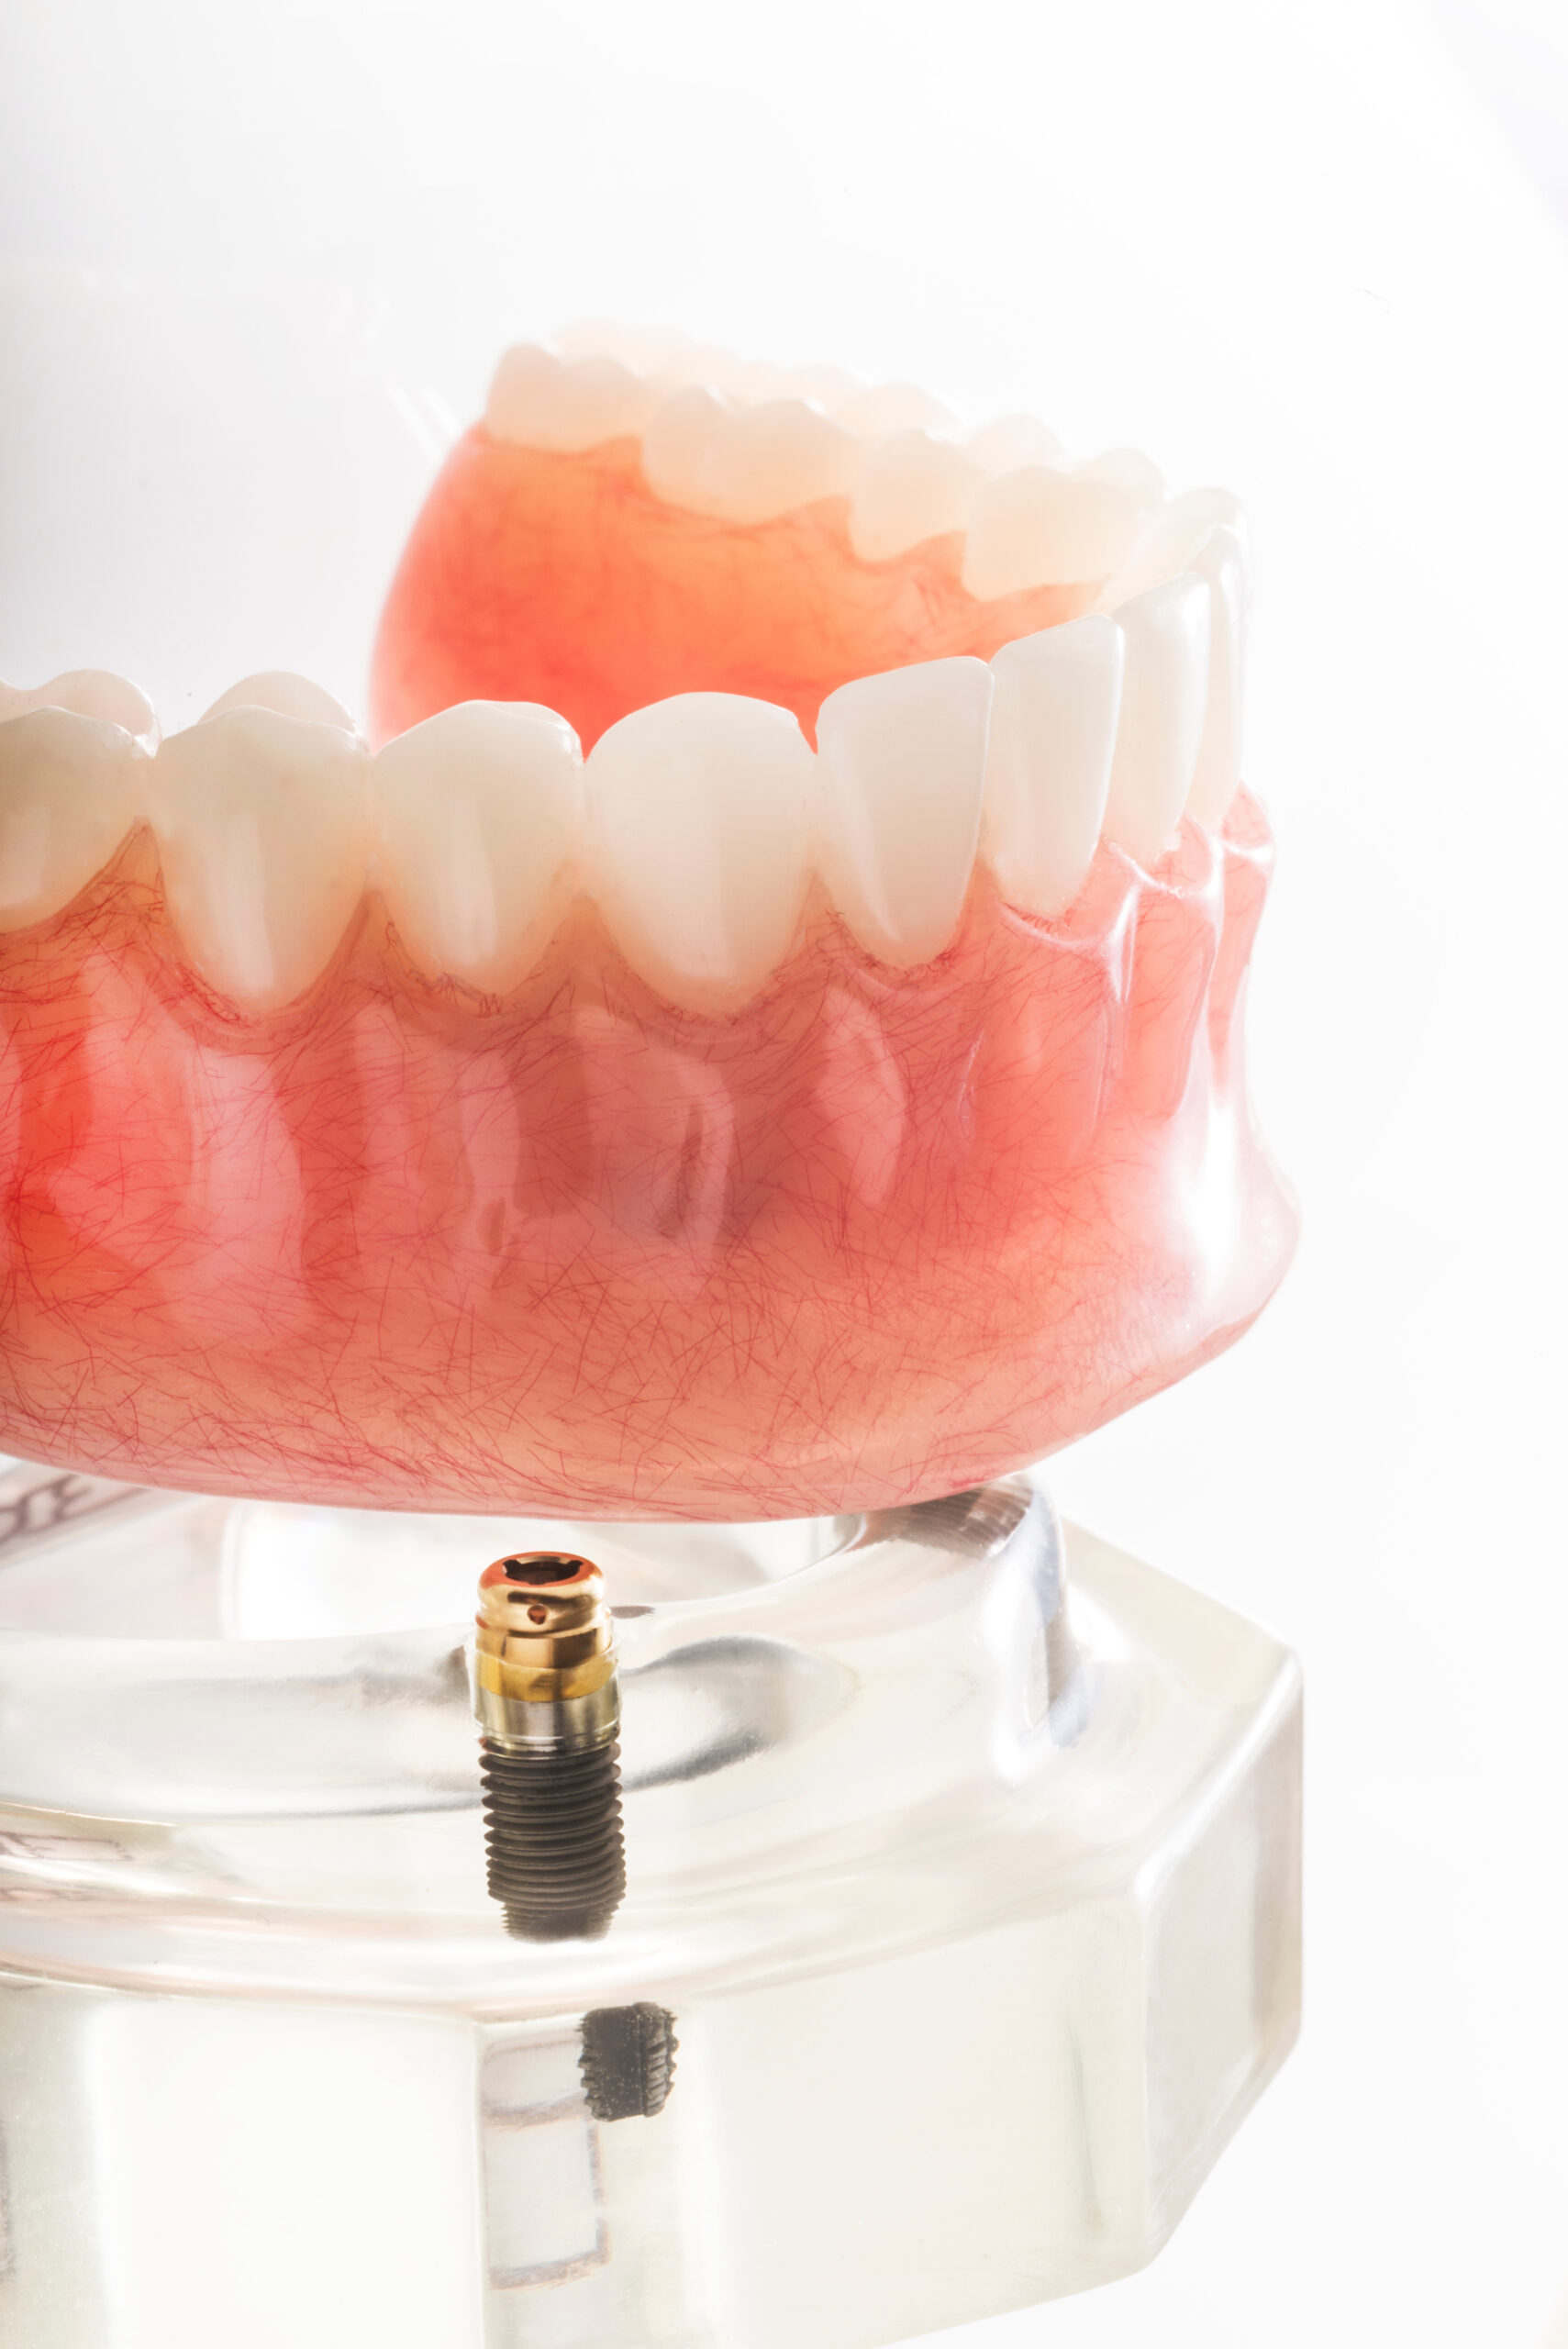 cleveland implant denture placement